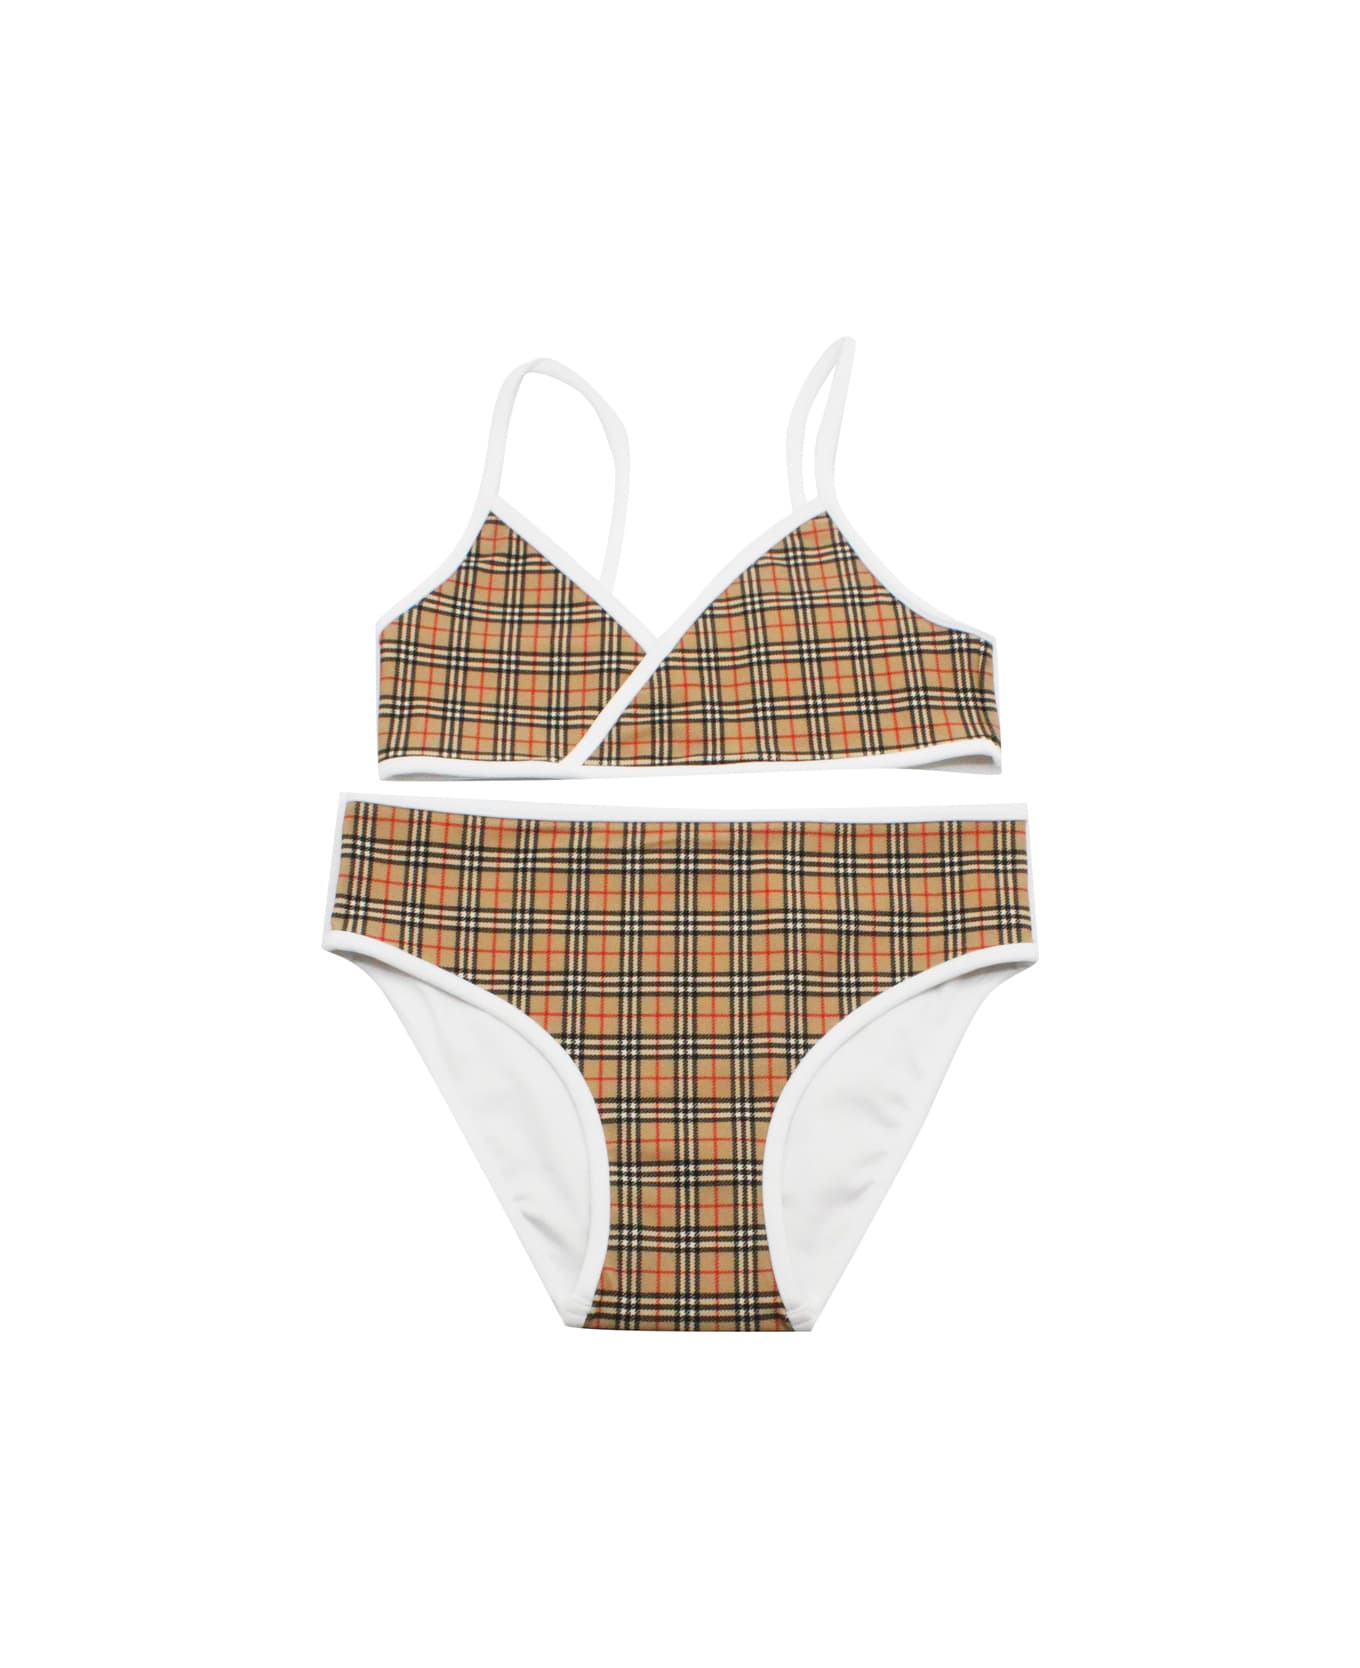 Burberry Bikini Swimsuit - Check Beige